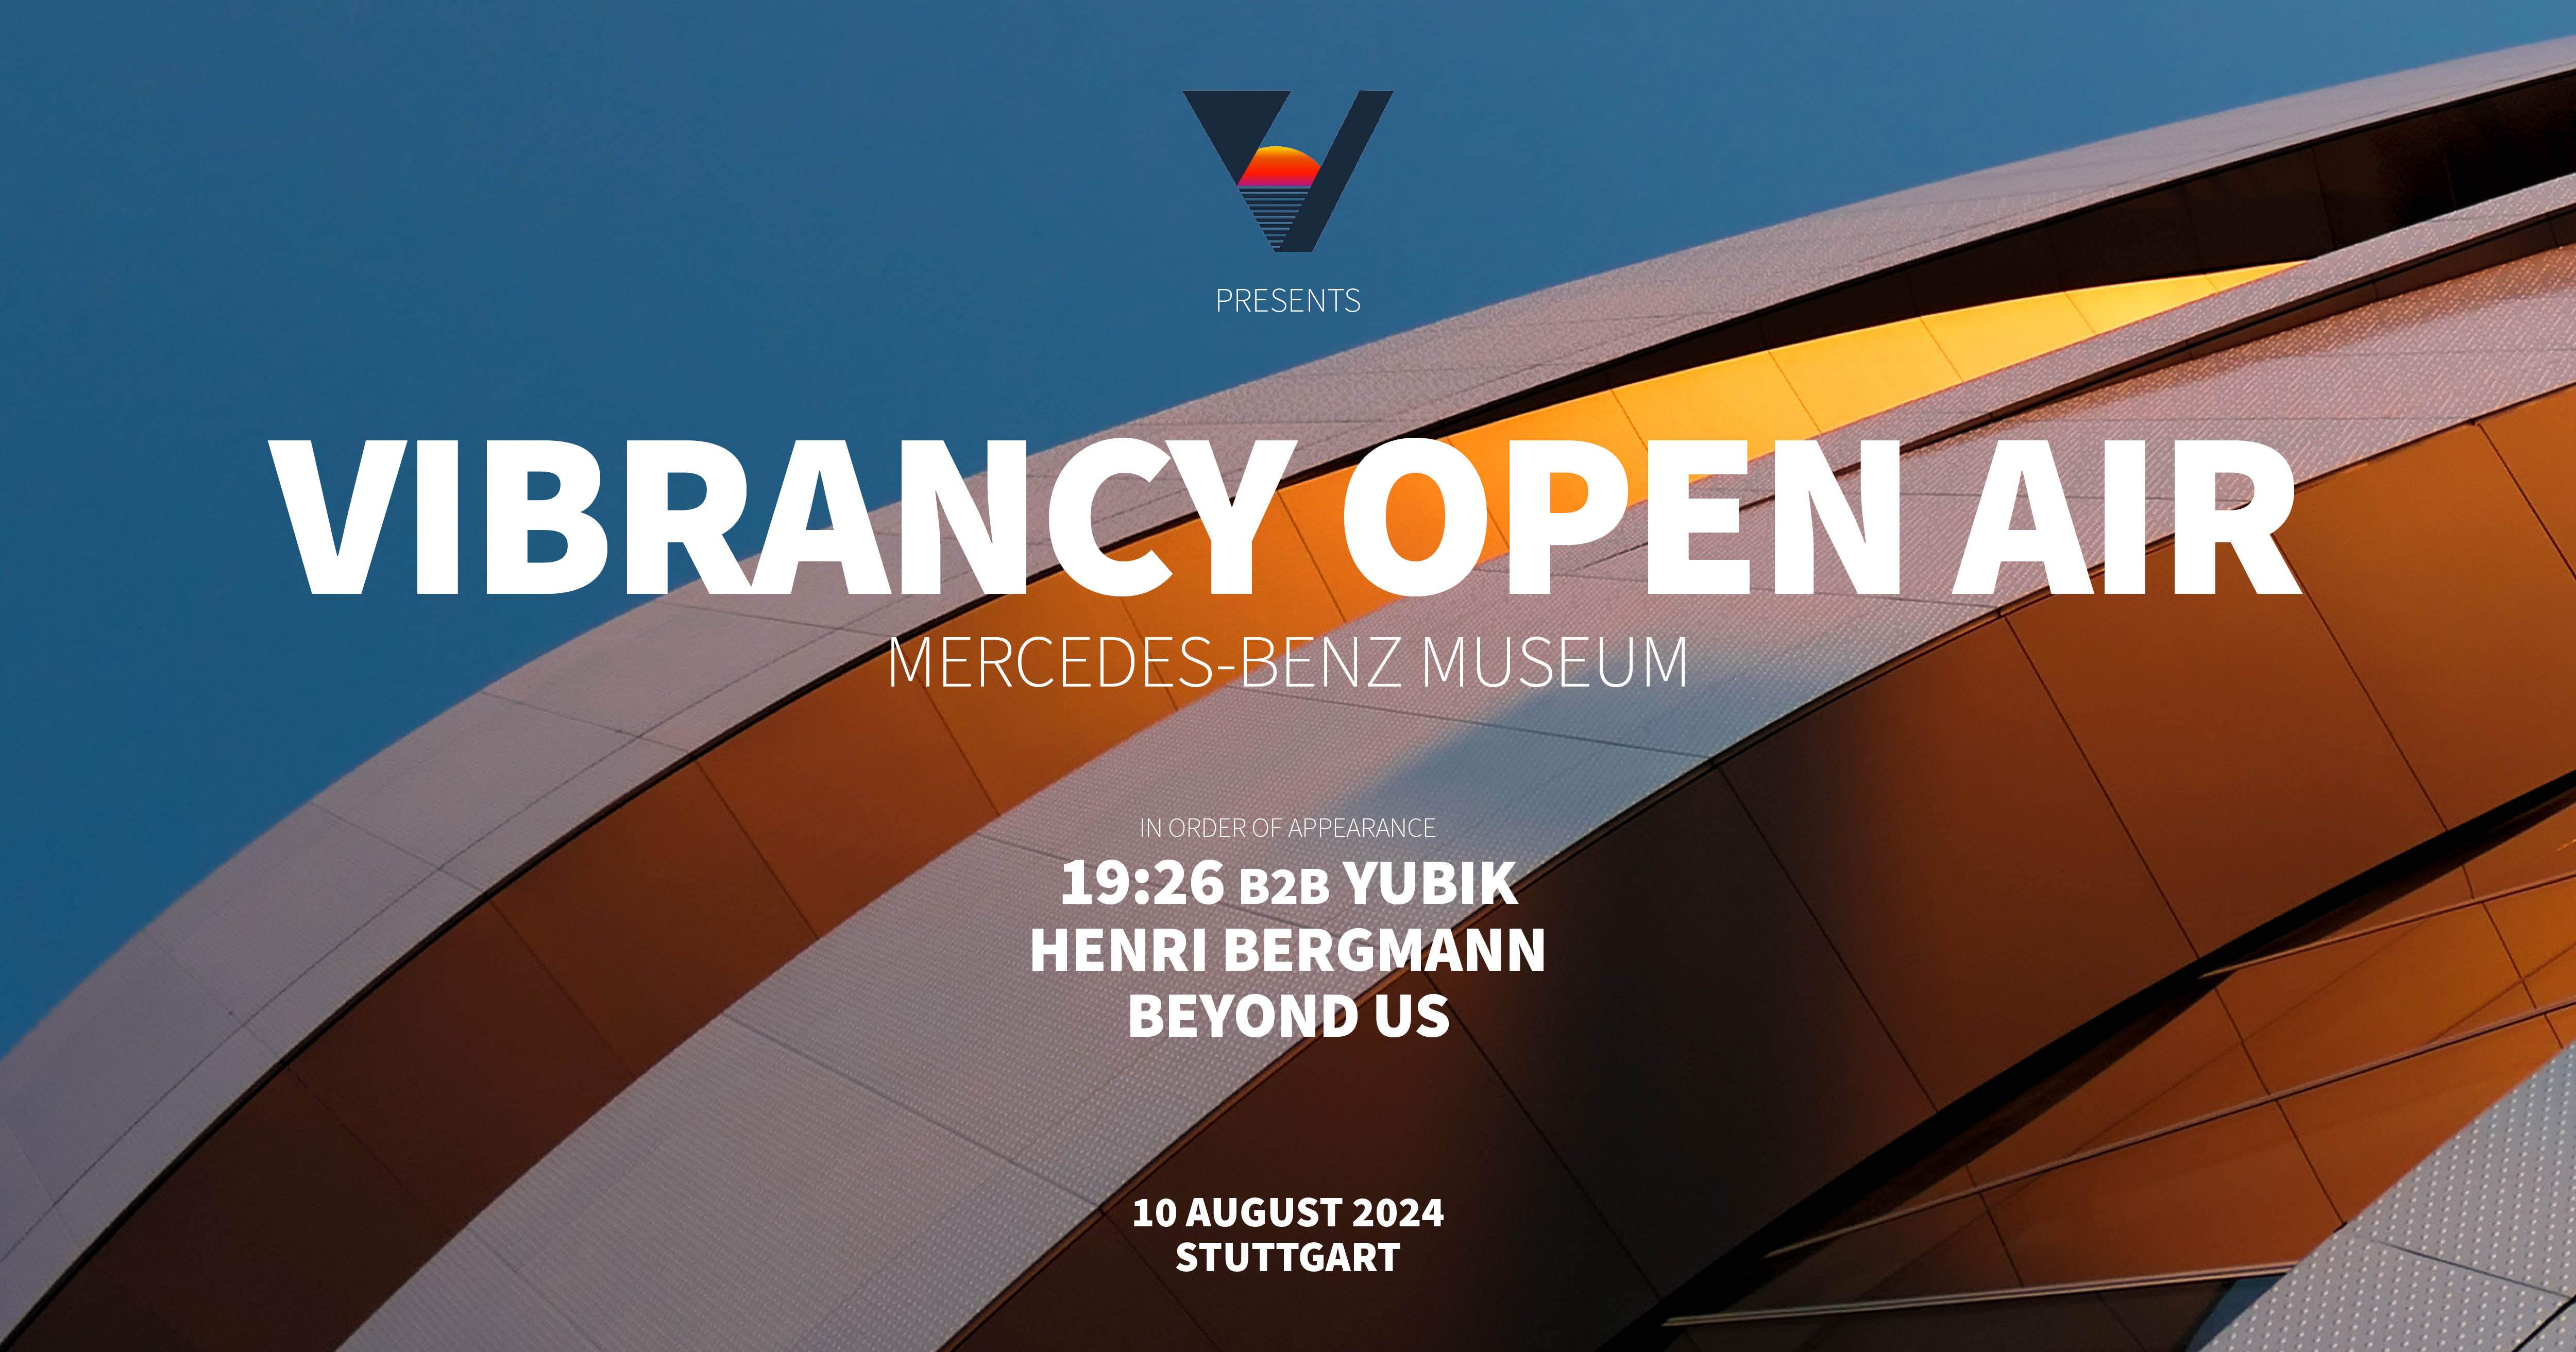 Vibrancy Open Air - Mercedes-Benz Museum - フライヤー表